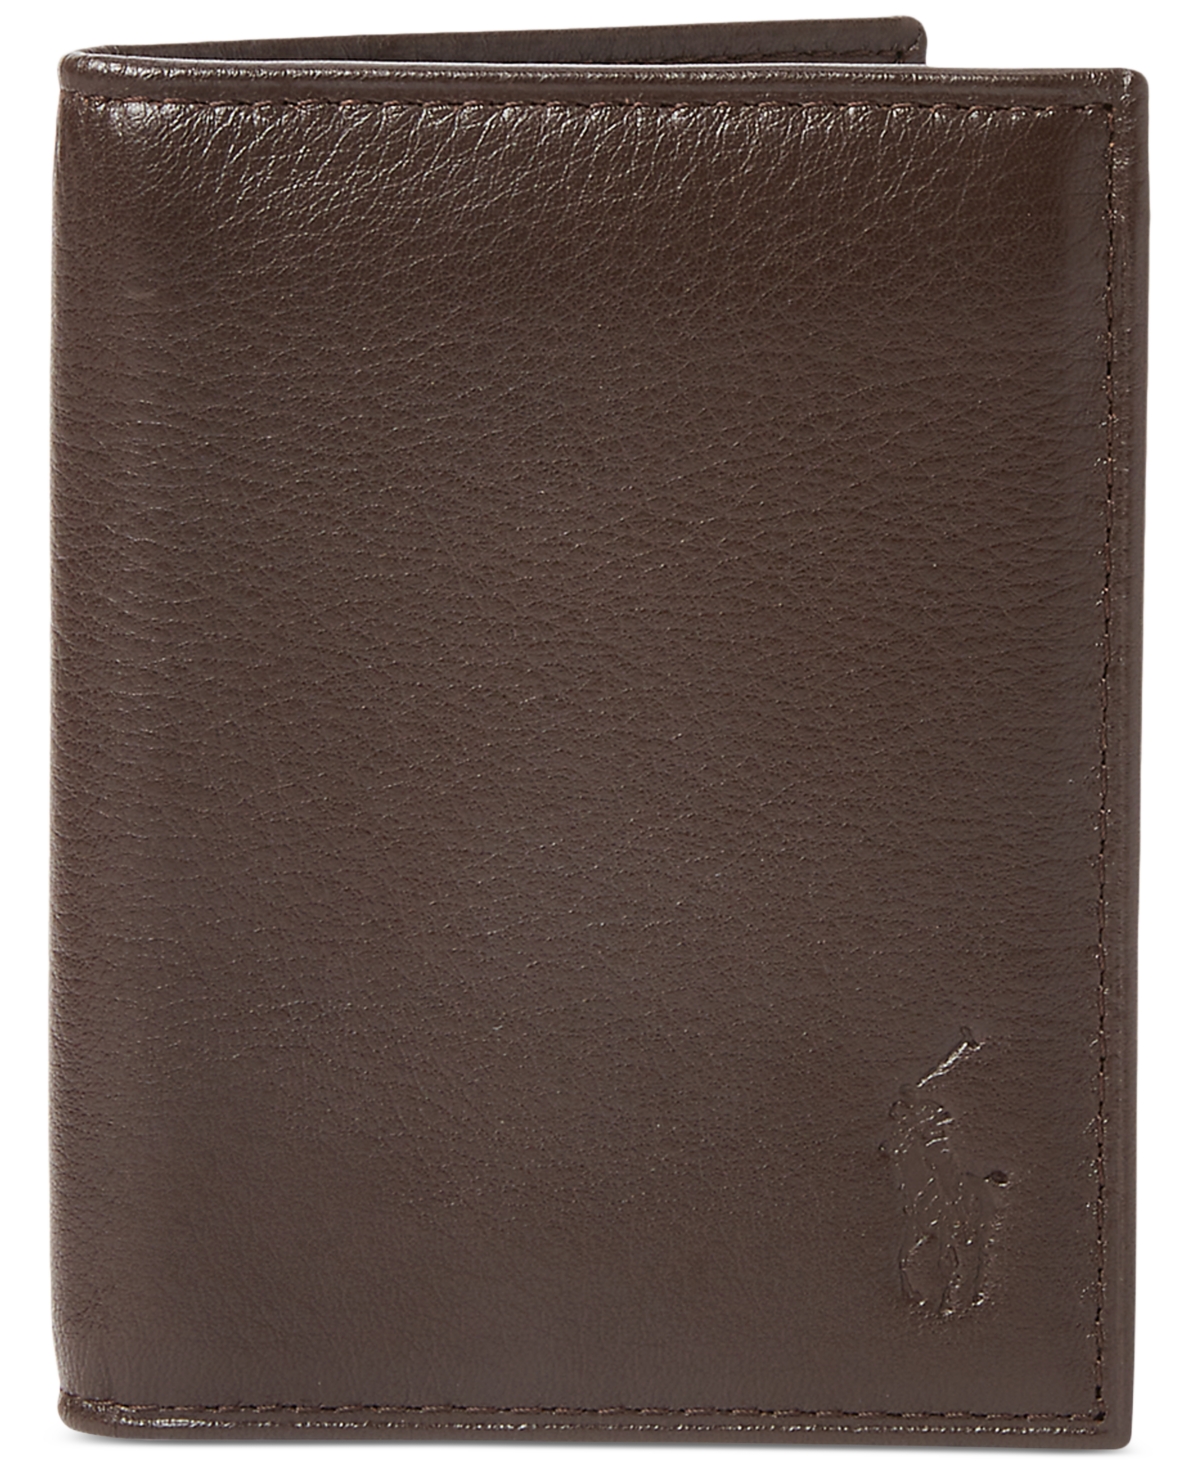 Polo Ralph Lauren Men's Pebbled Leather Billfold In Brown